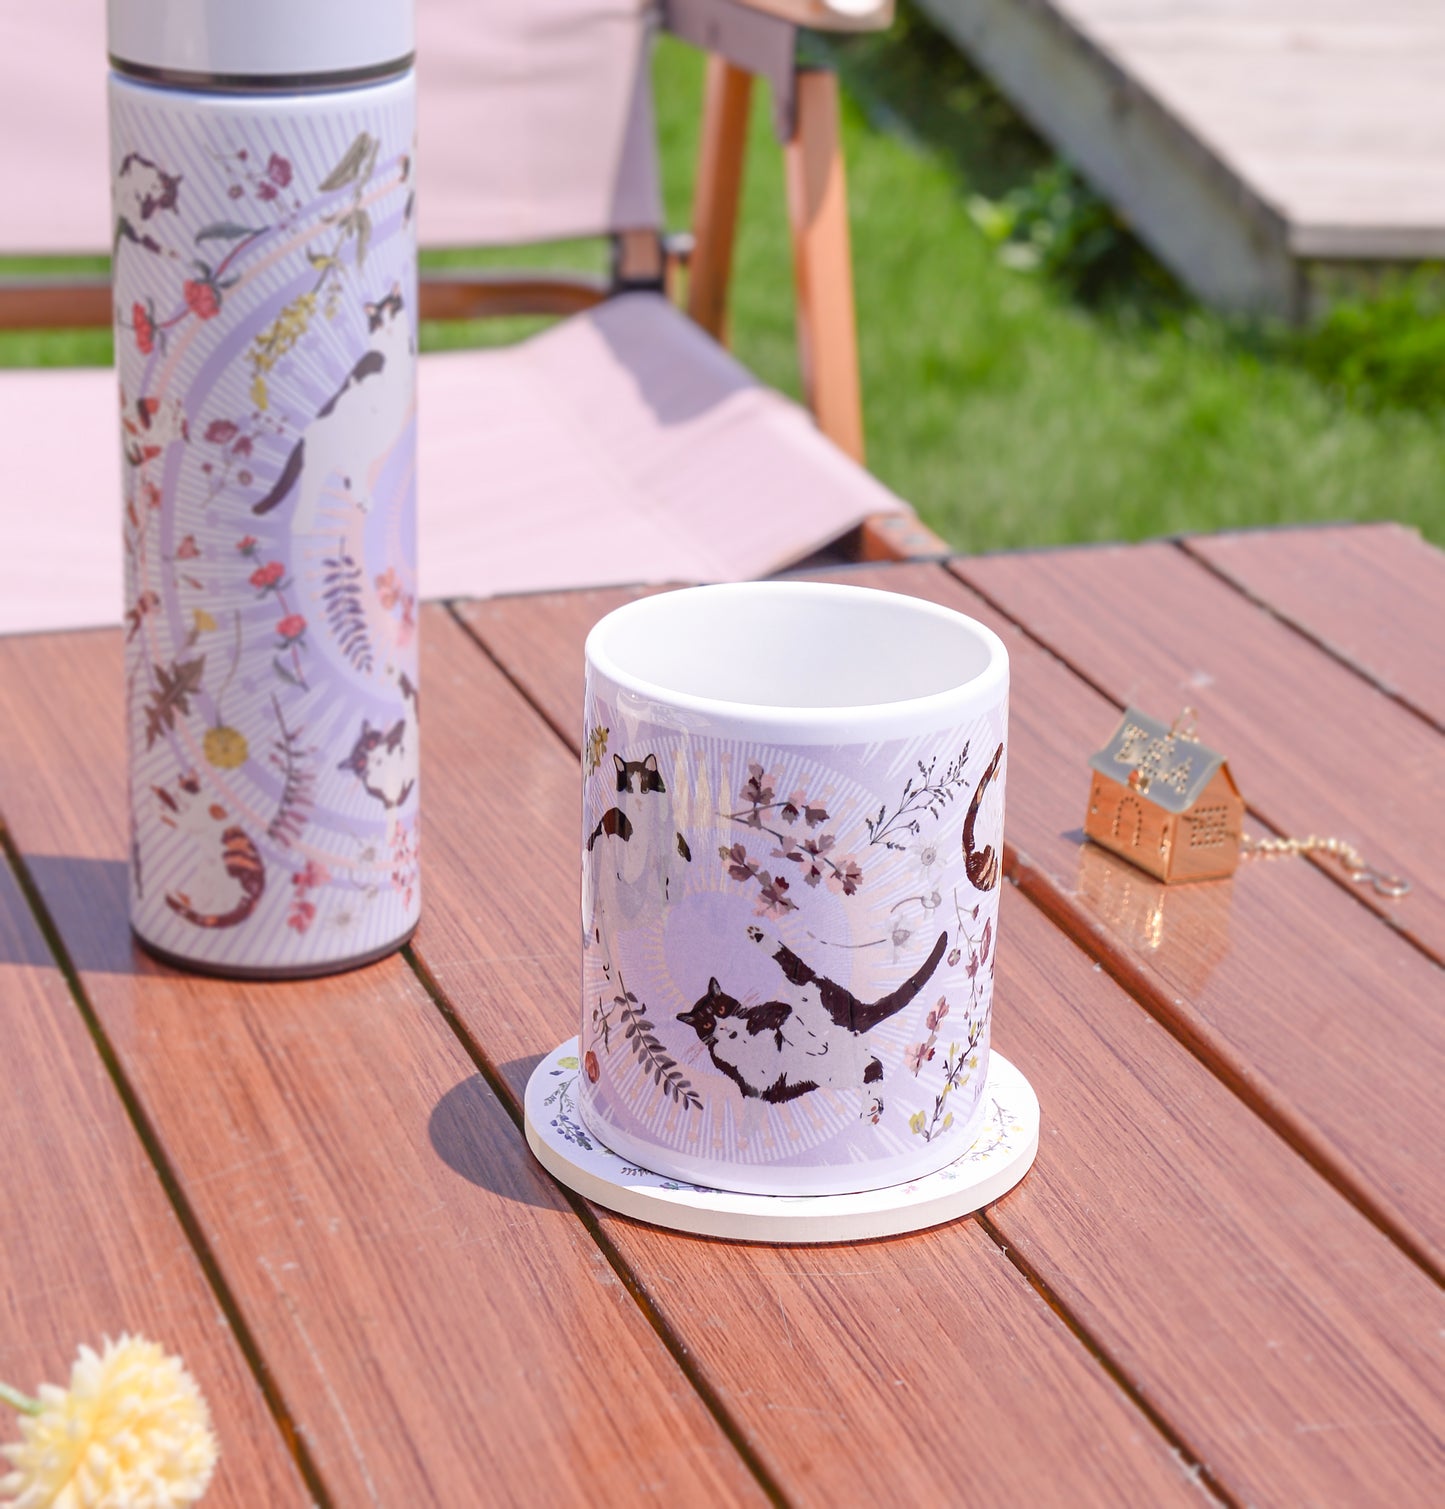 "Yogis Cat and Flower" Mug, Tea Infuser and Coaster Set